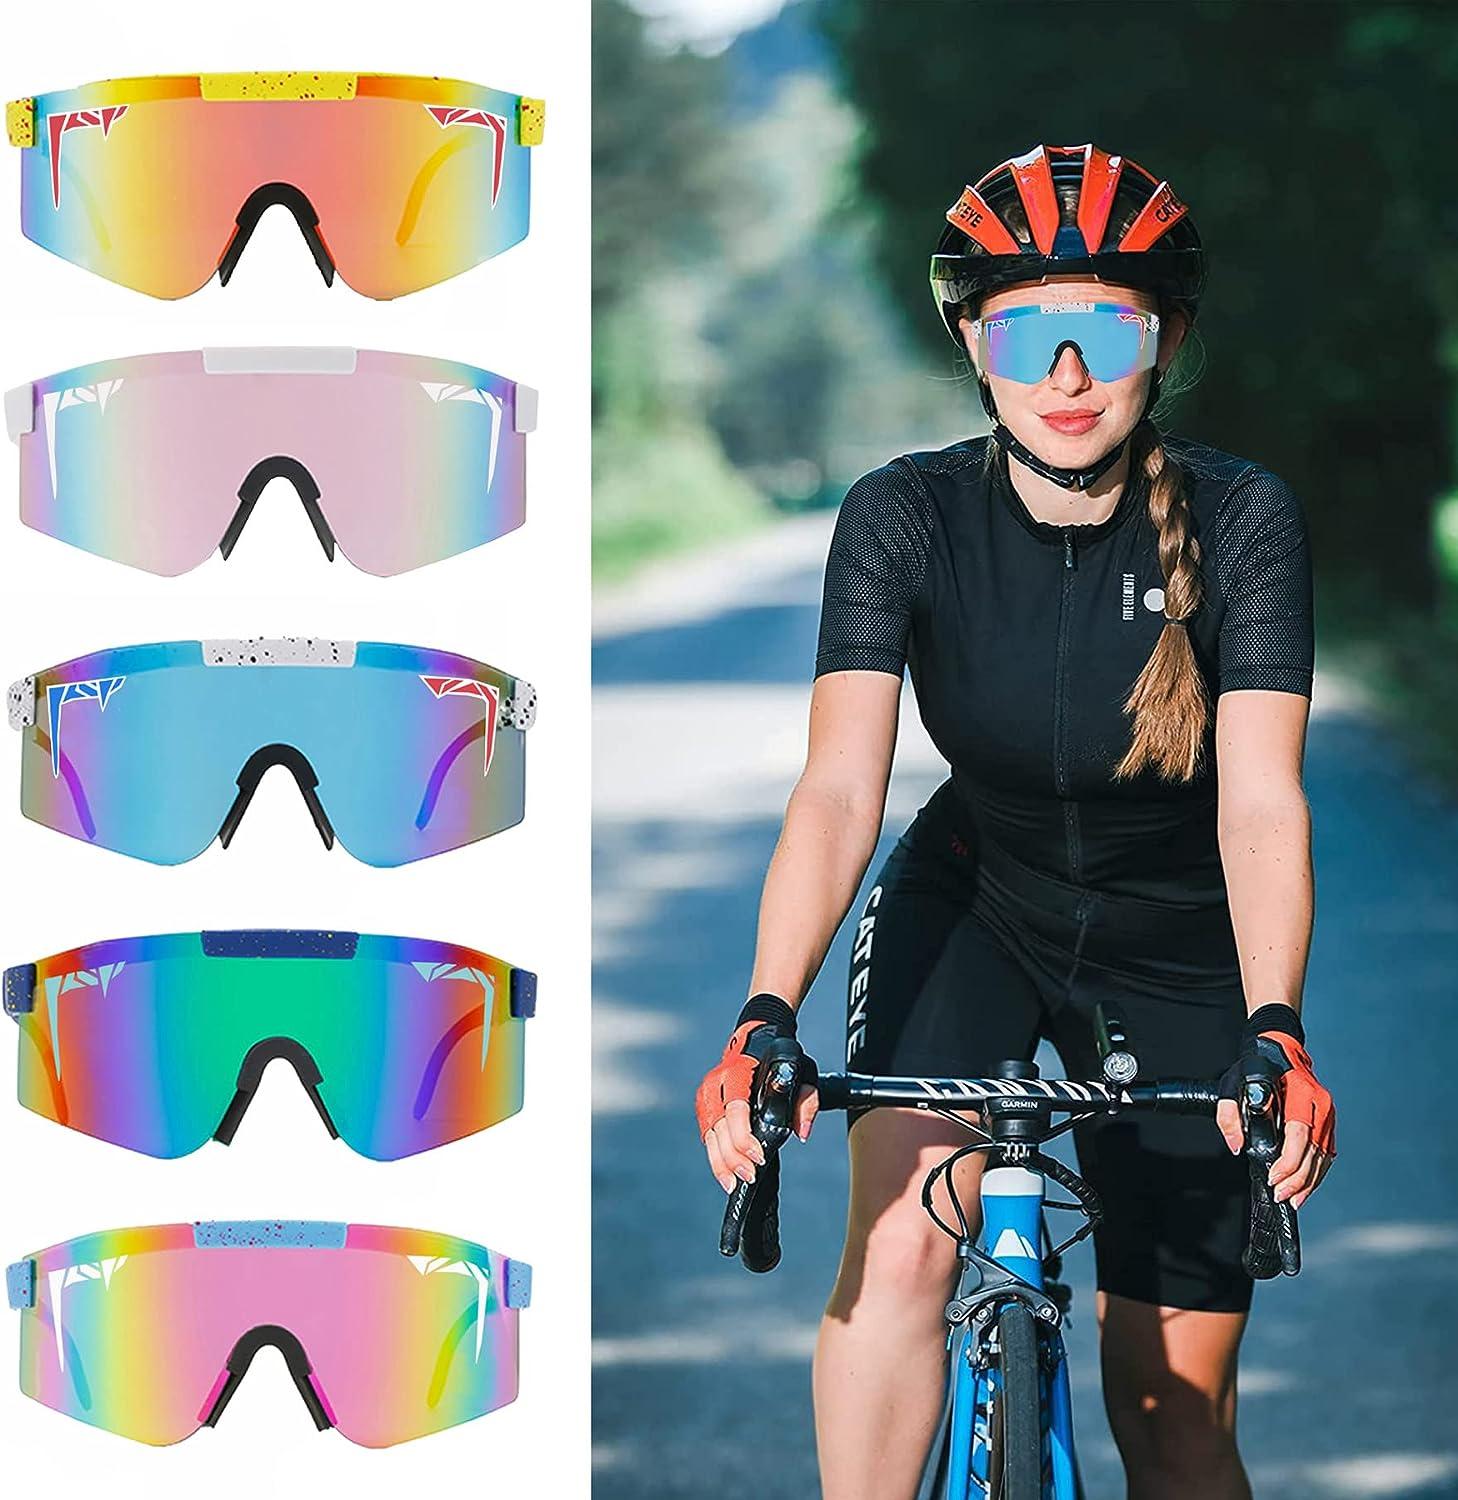 SAUYIXH Polarized Sports Sunglasses, UV400 Protection Cycling